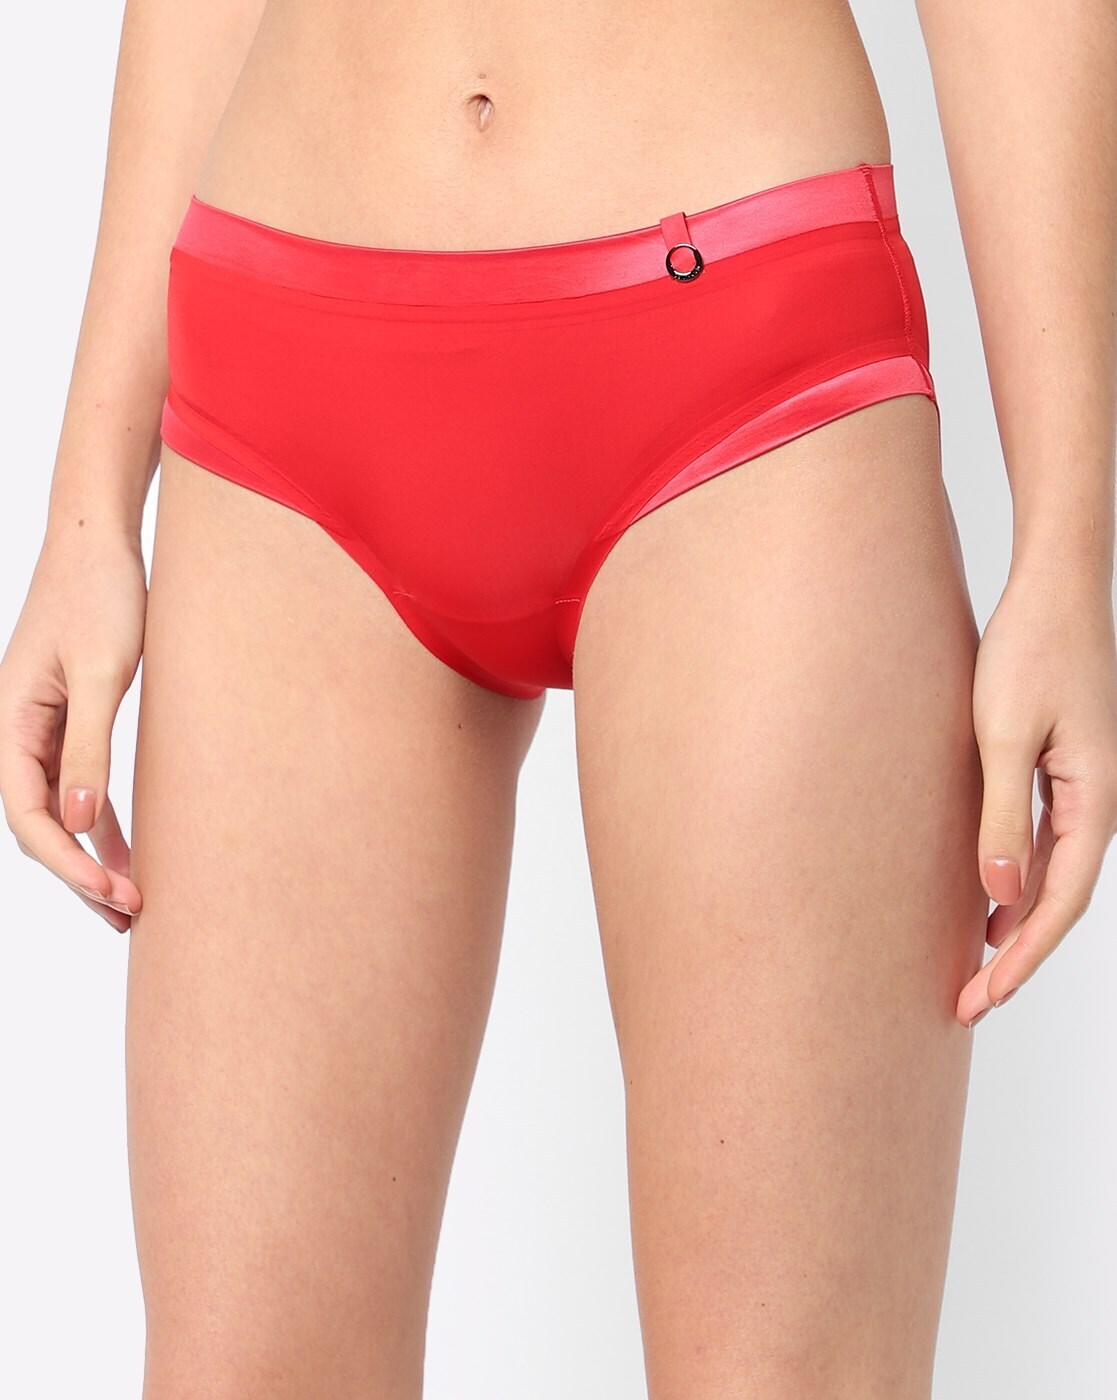 Buy Red Panties for Women by Calvin Klein Underwear Online